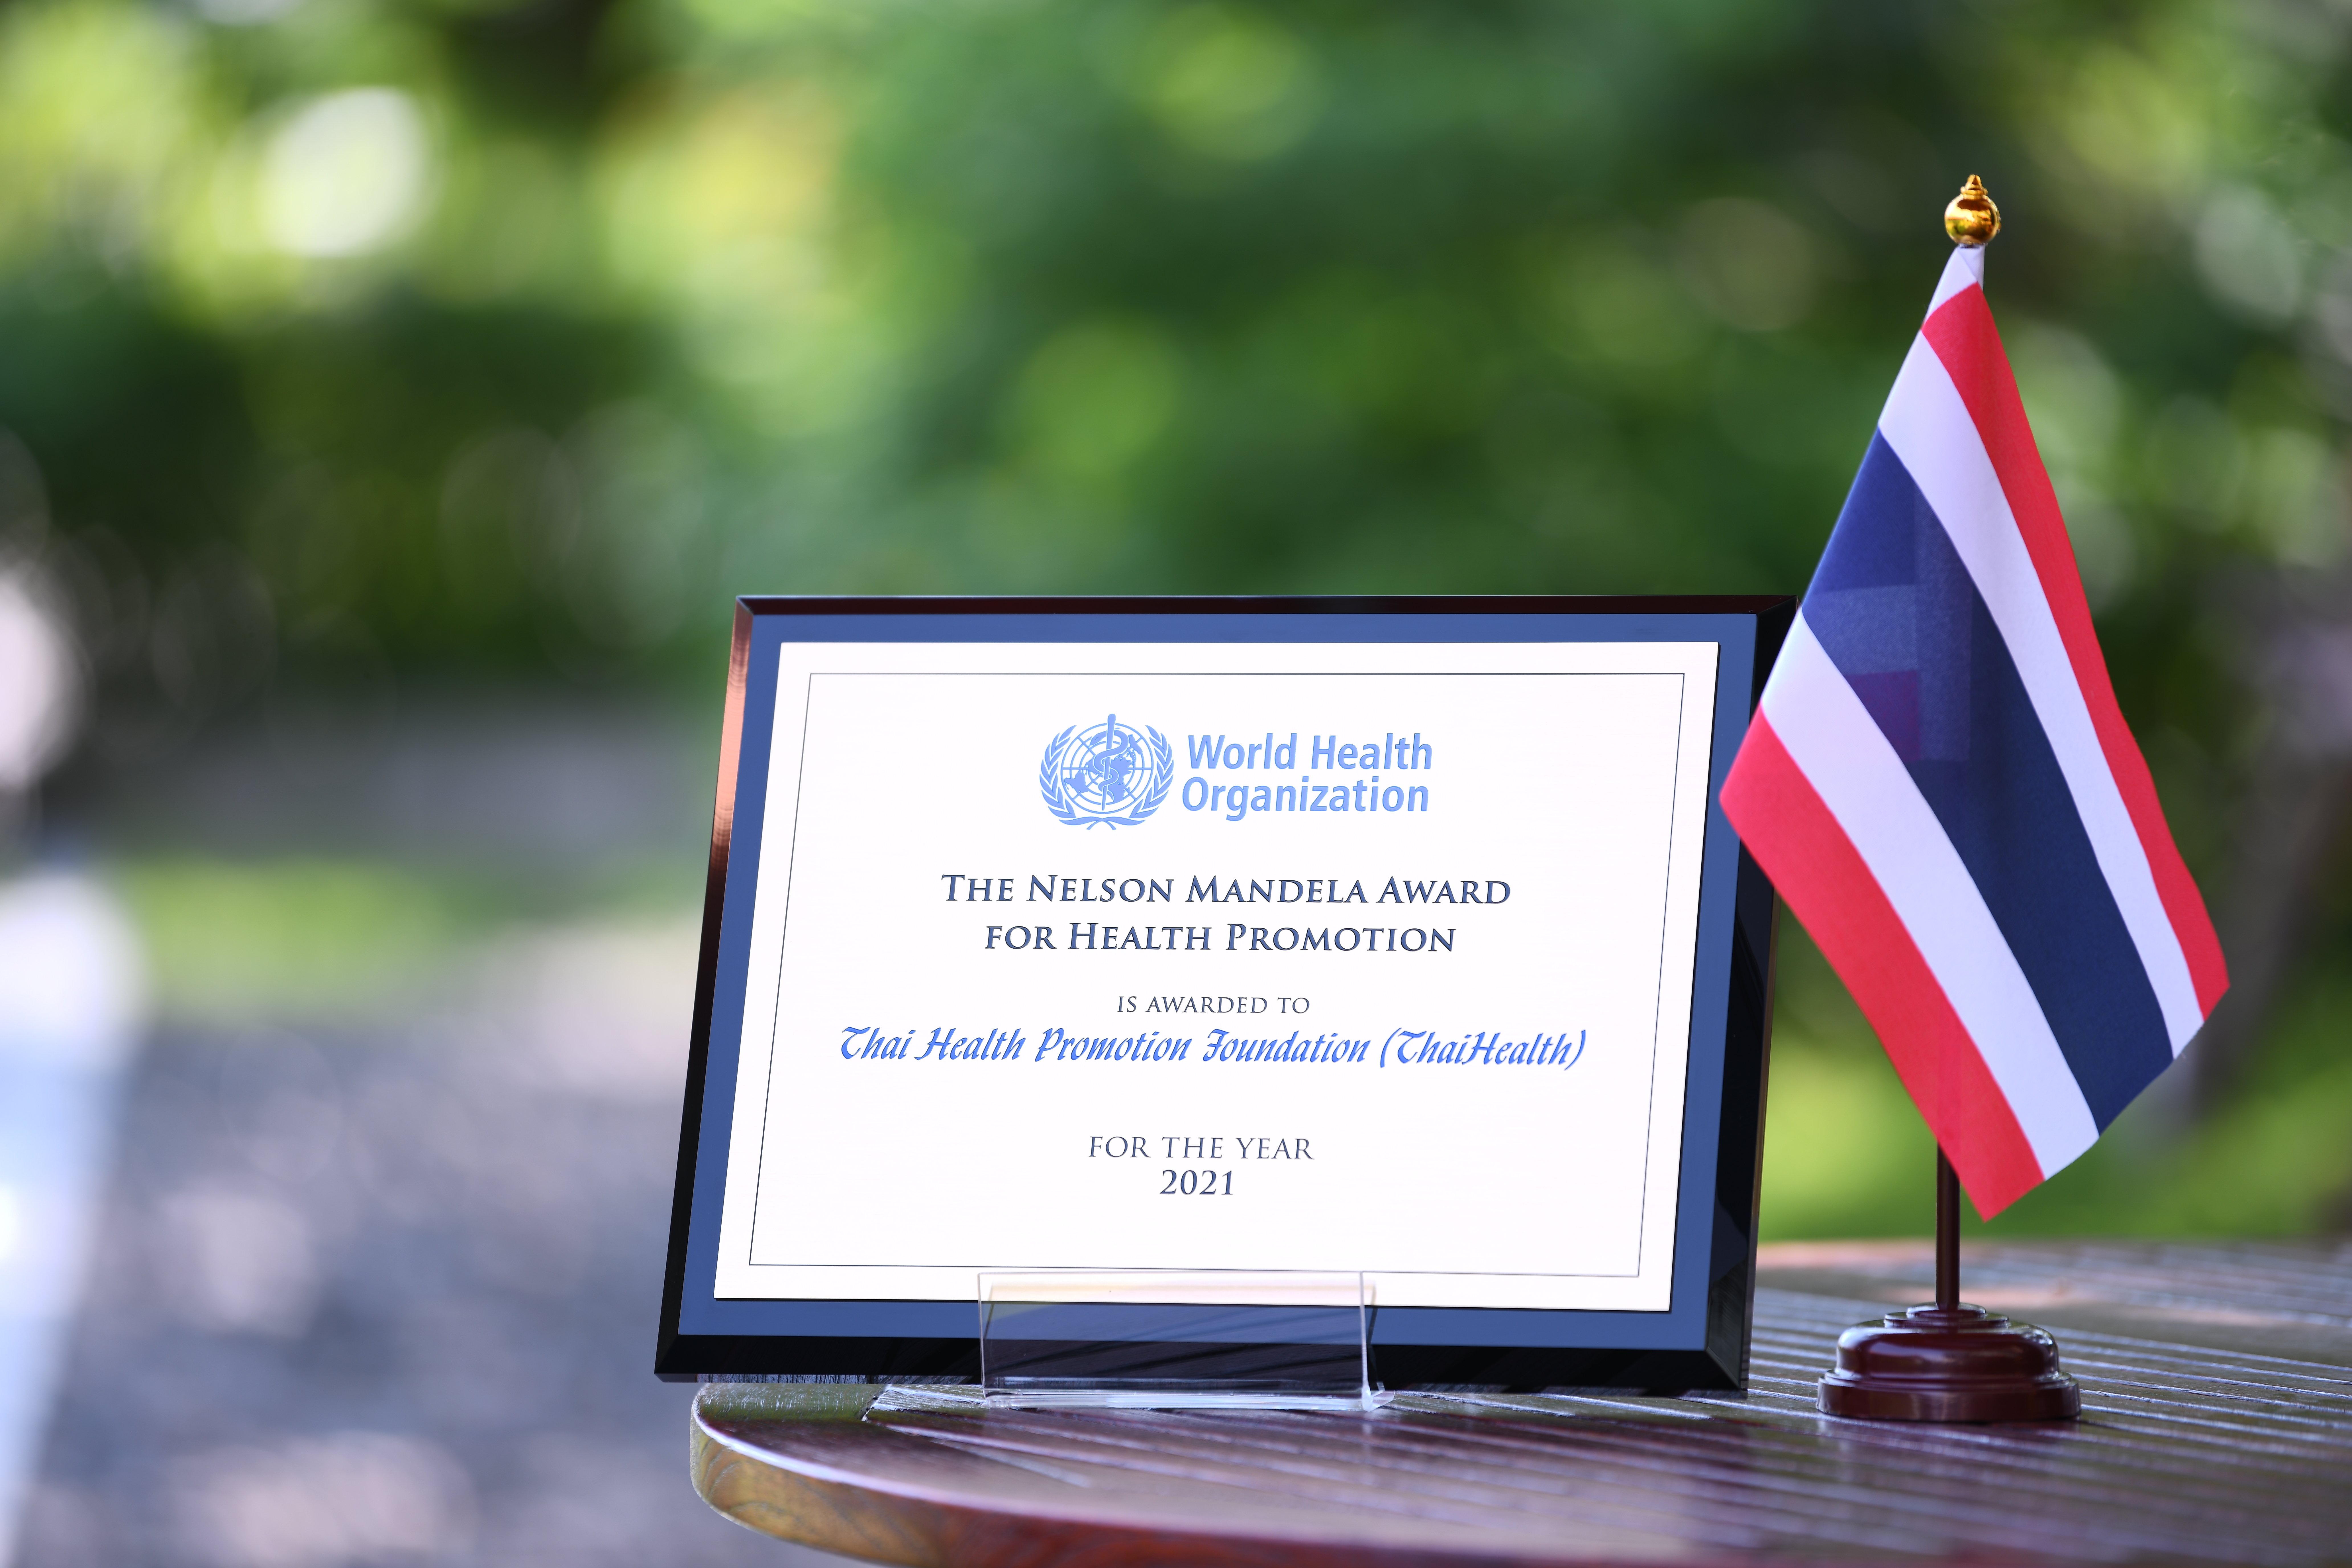 WHO มอบรางวัลเนลสัน แมนเดลา ยกย่อง สสส. ผู้นำสร้างเสริมสุขภาพของโลก thaihealth